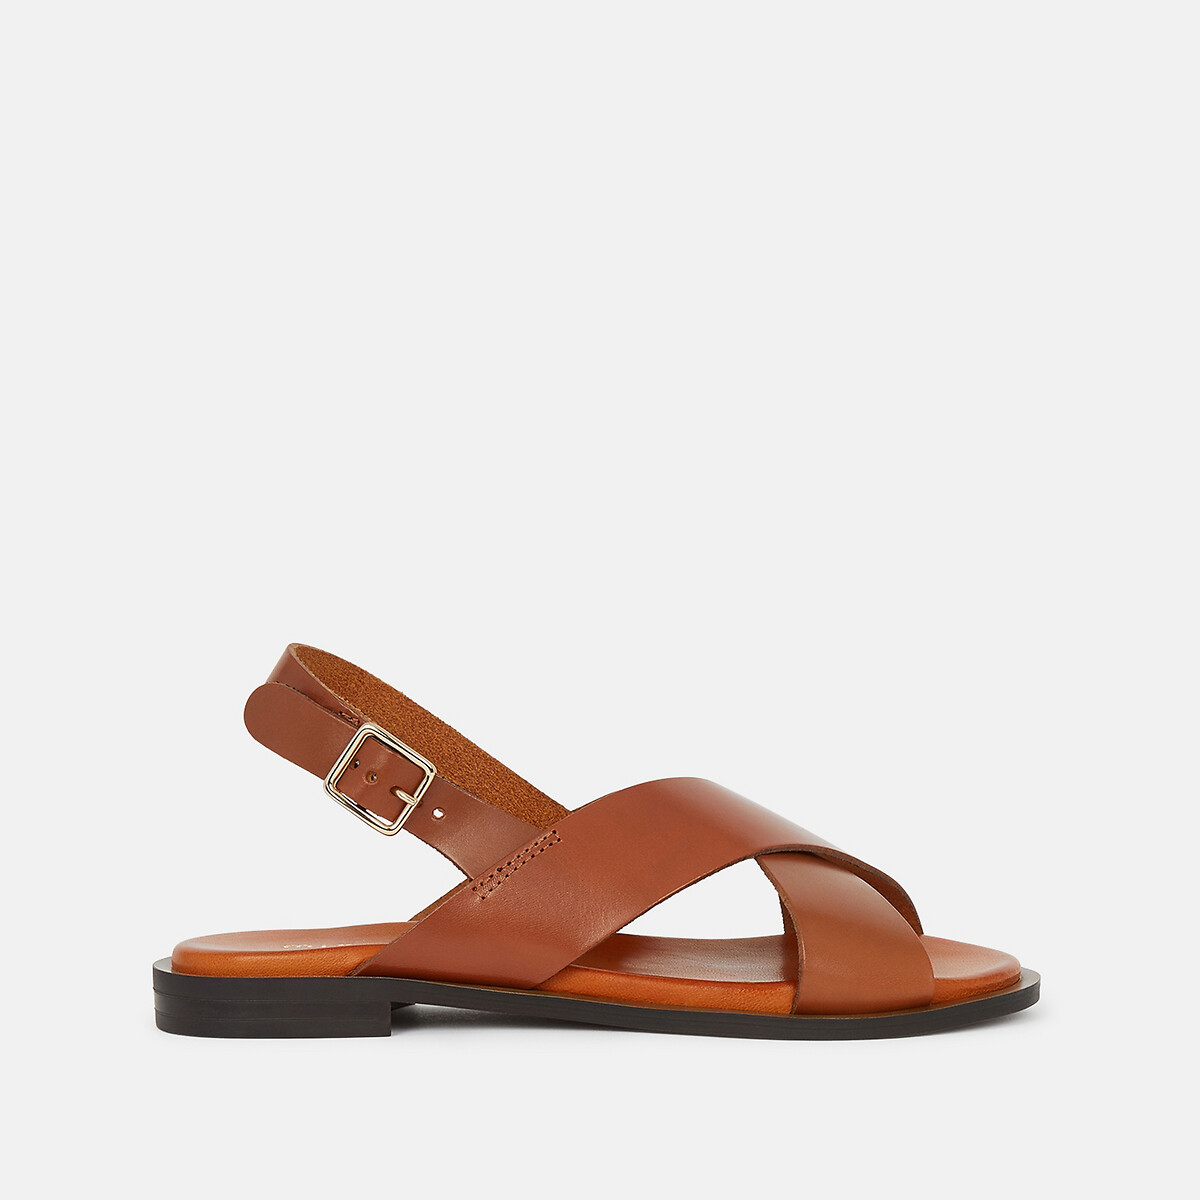 Dona flat leather sandals , cognac, Minelli | La Redoute